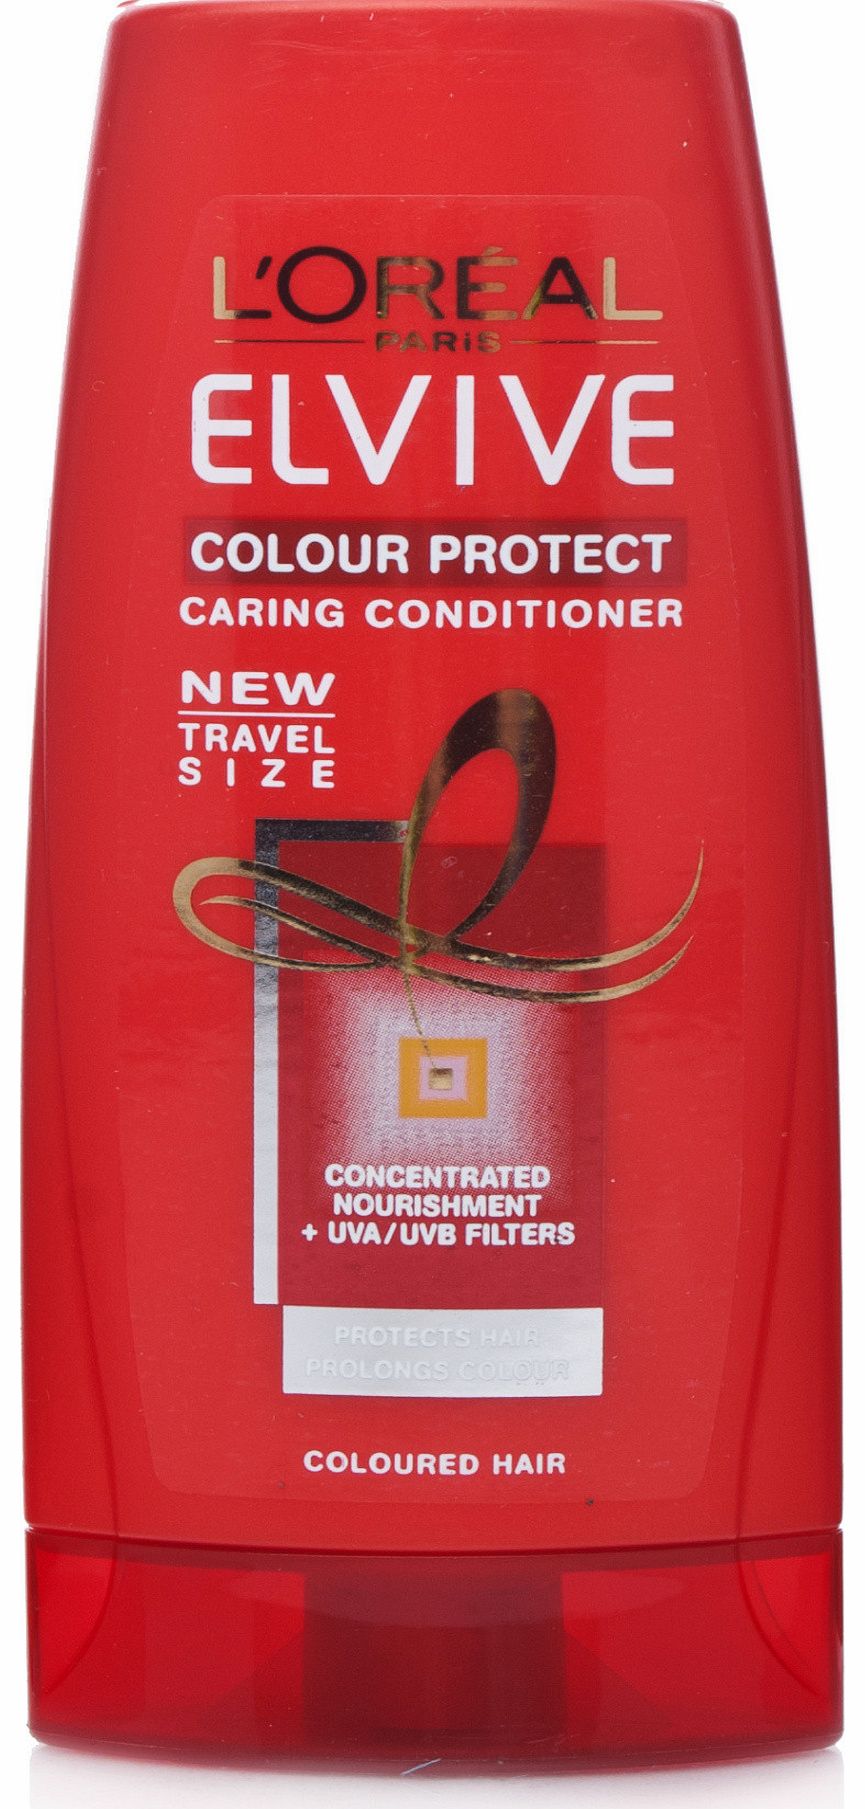 L'Oreal Elvive Colour Protect Conditioner